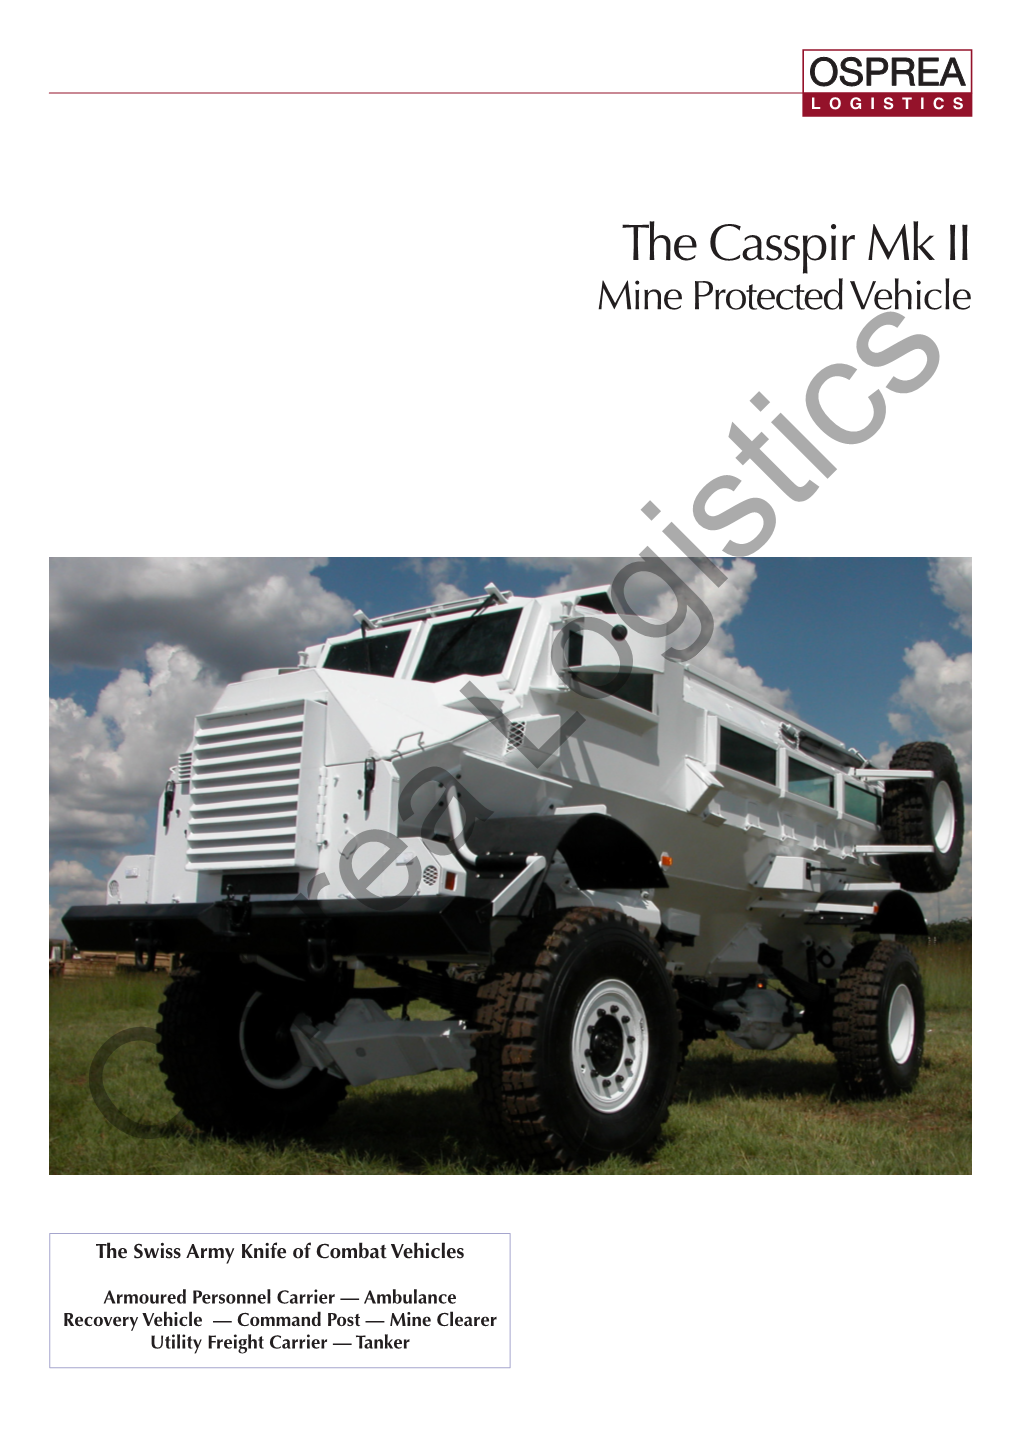 The Casspir Mk II Mine Protected Vehicle